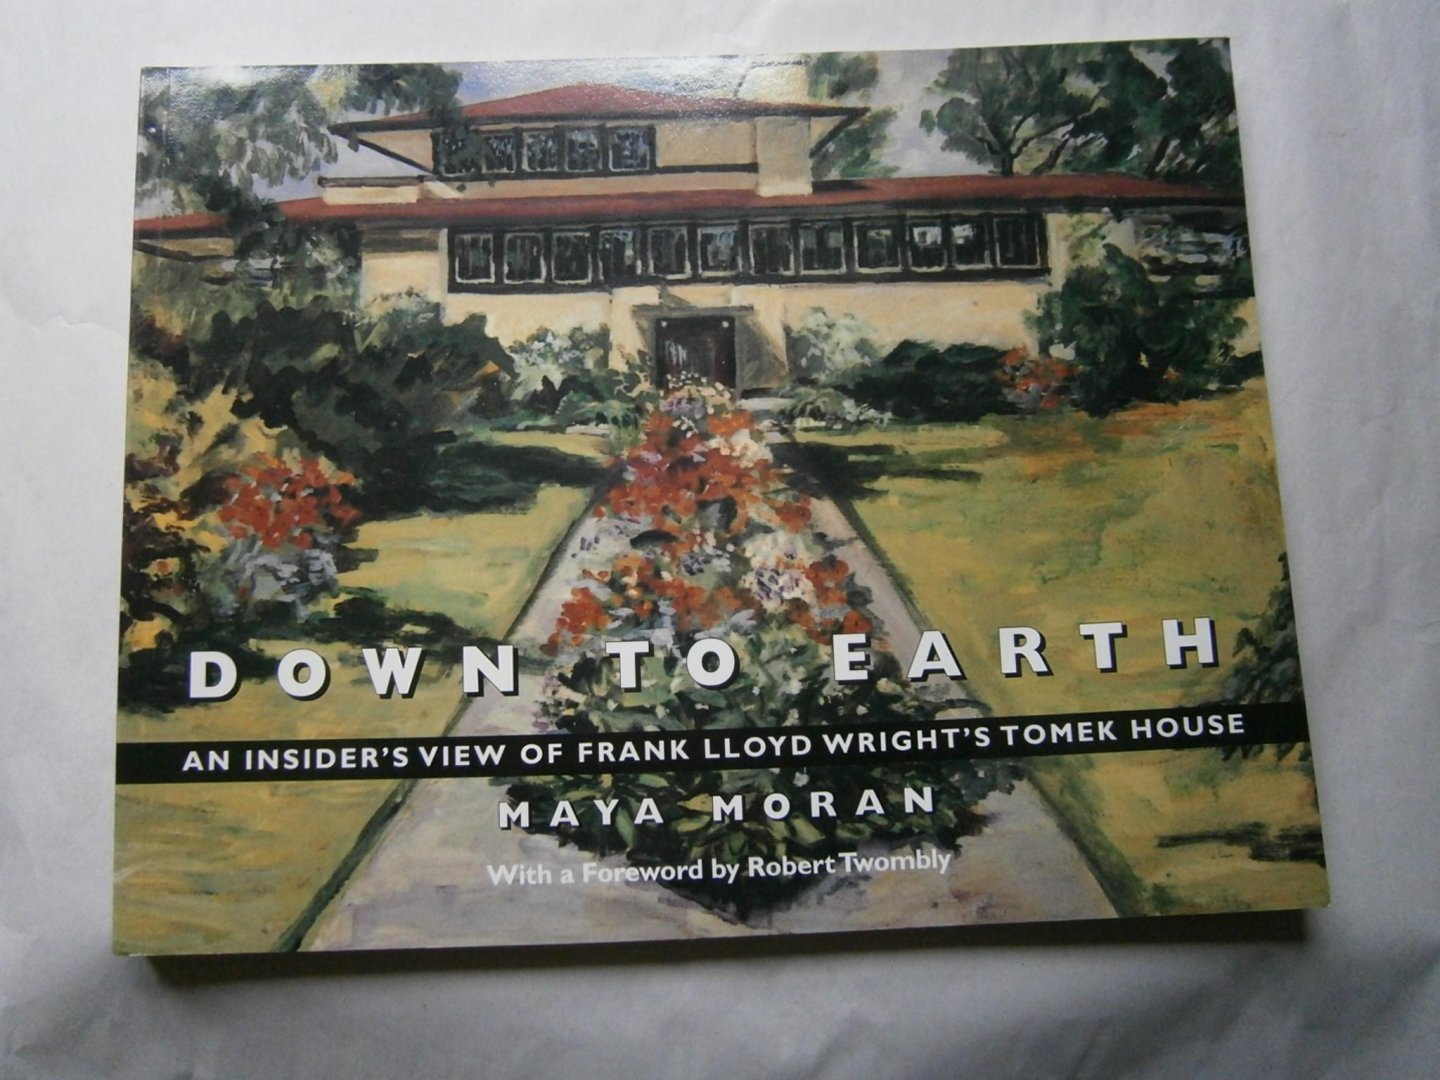 Moran, Maya - Down to earth, an insider's view of Frank Lloyd Wright's Tomek House